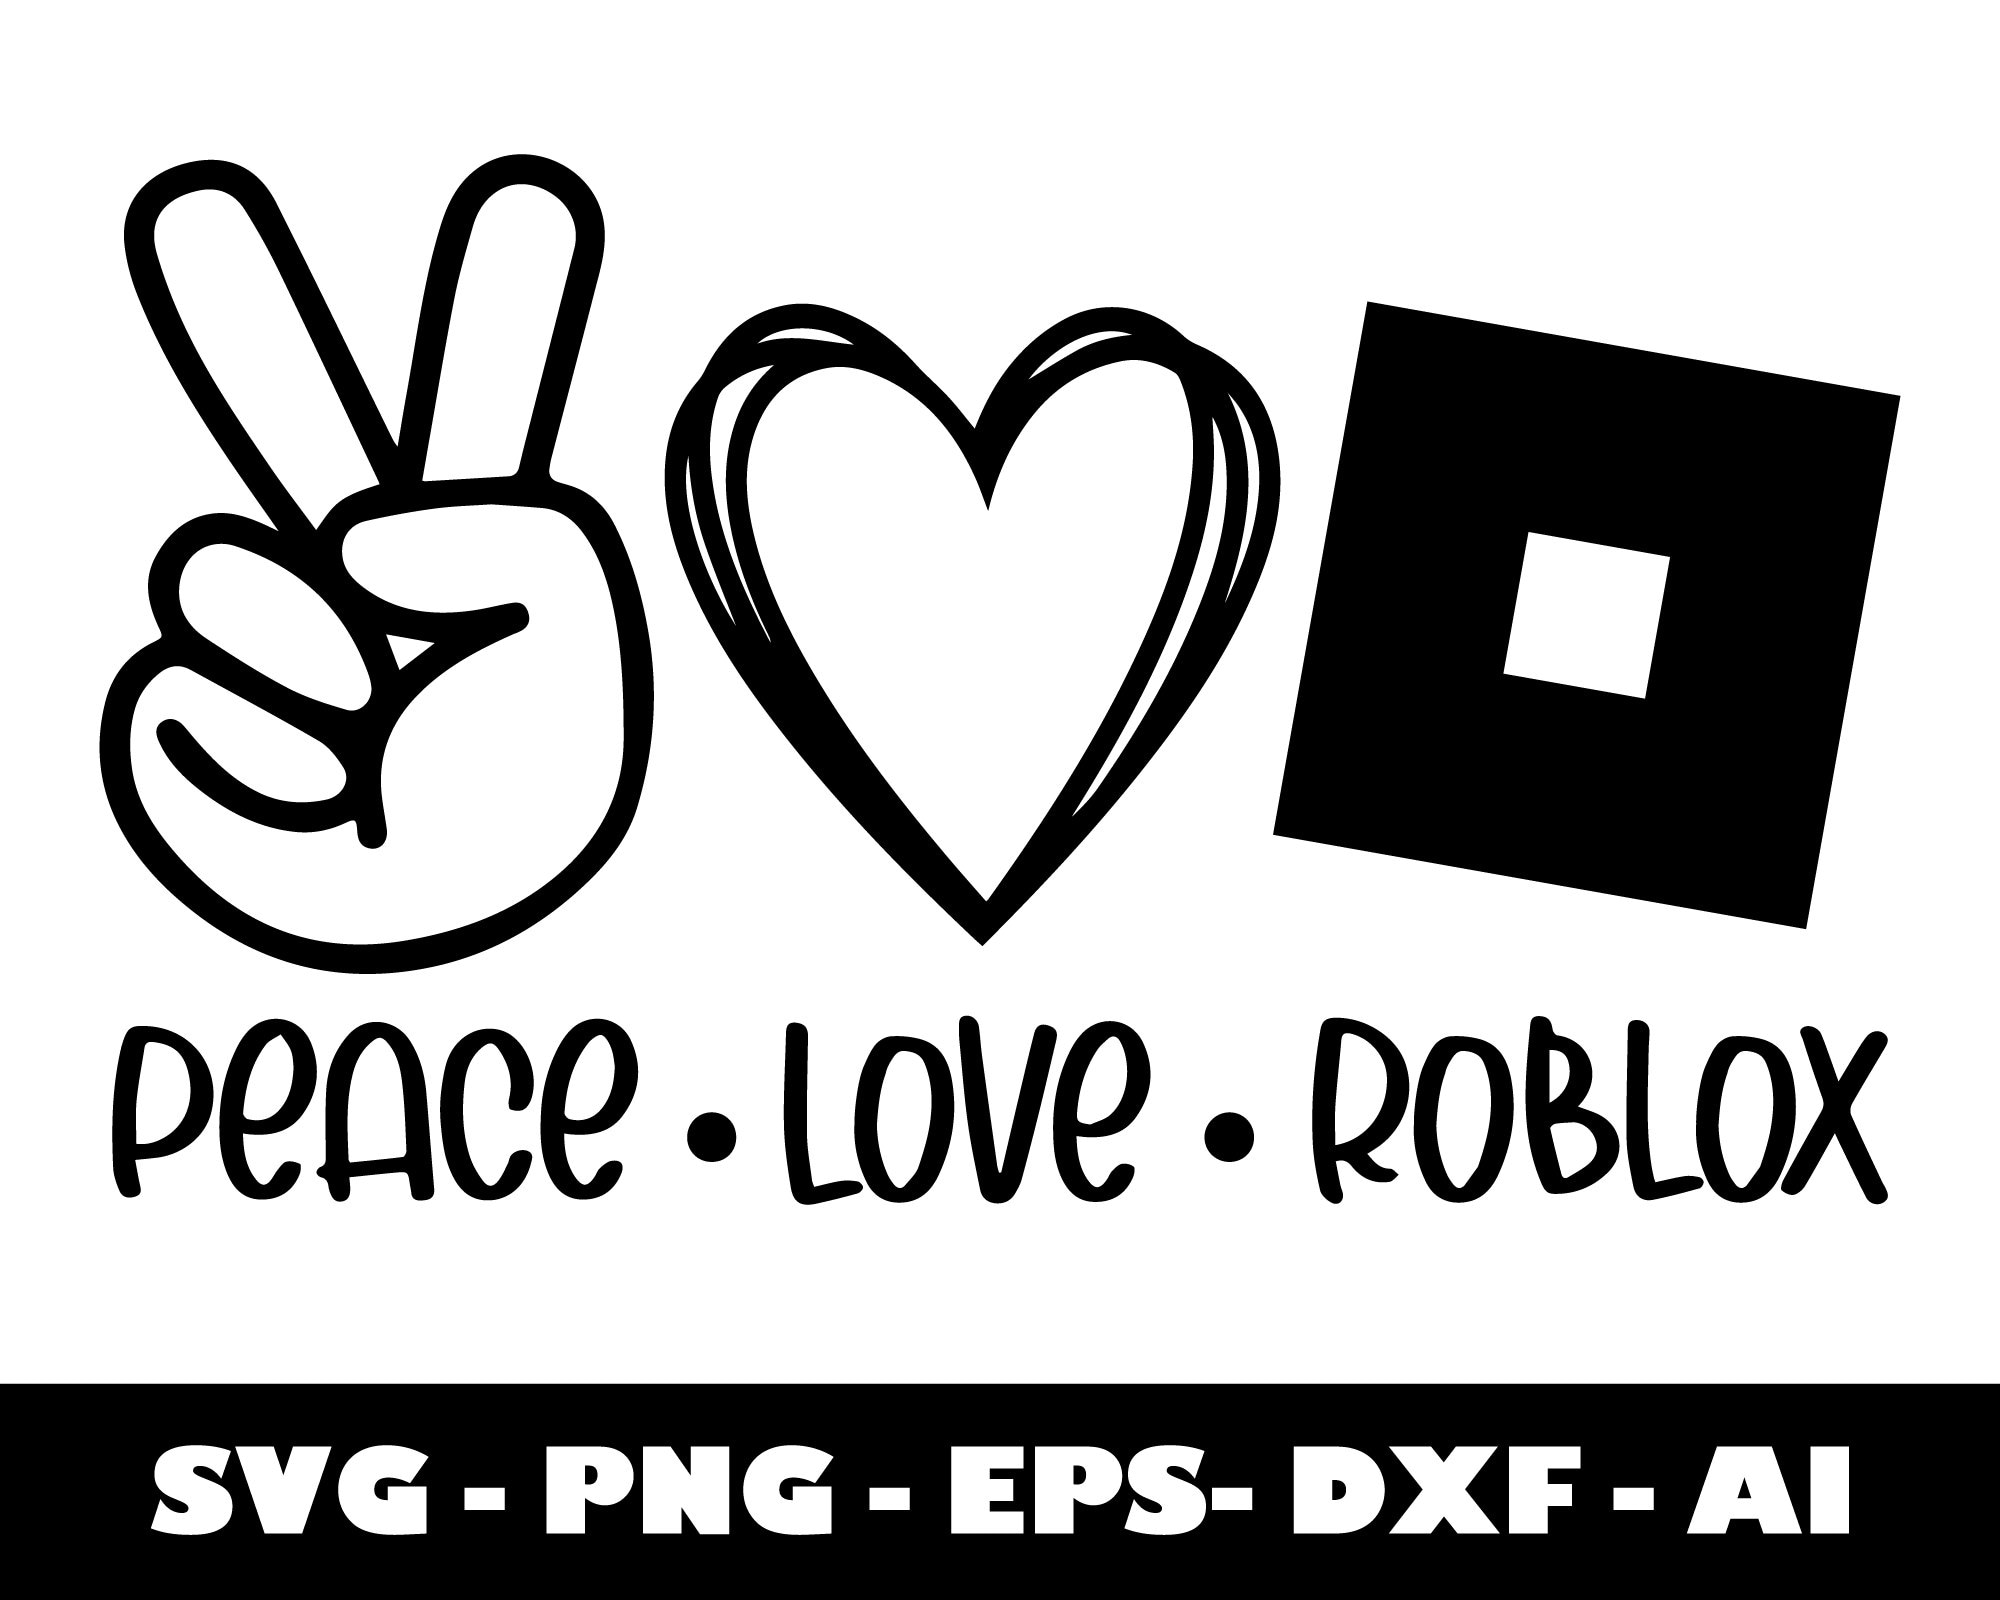 22 Roblox SVG, Roblox Printable Files Download